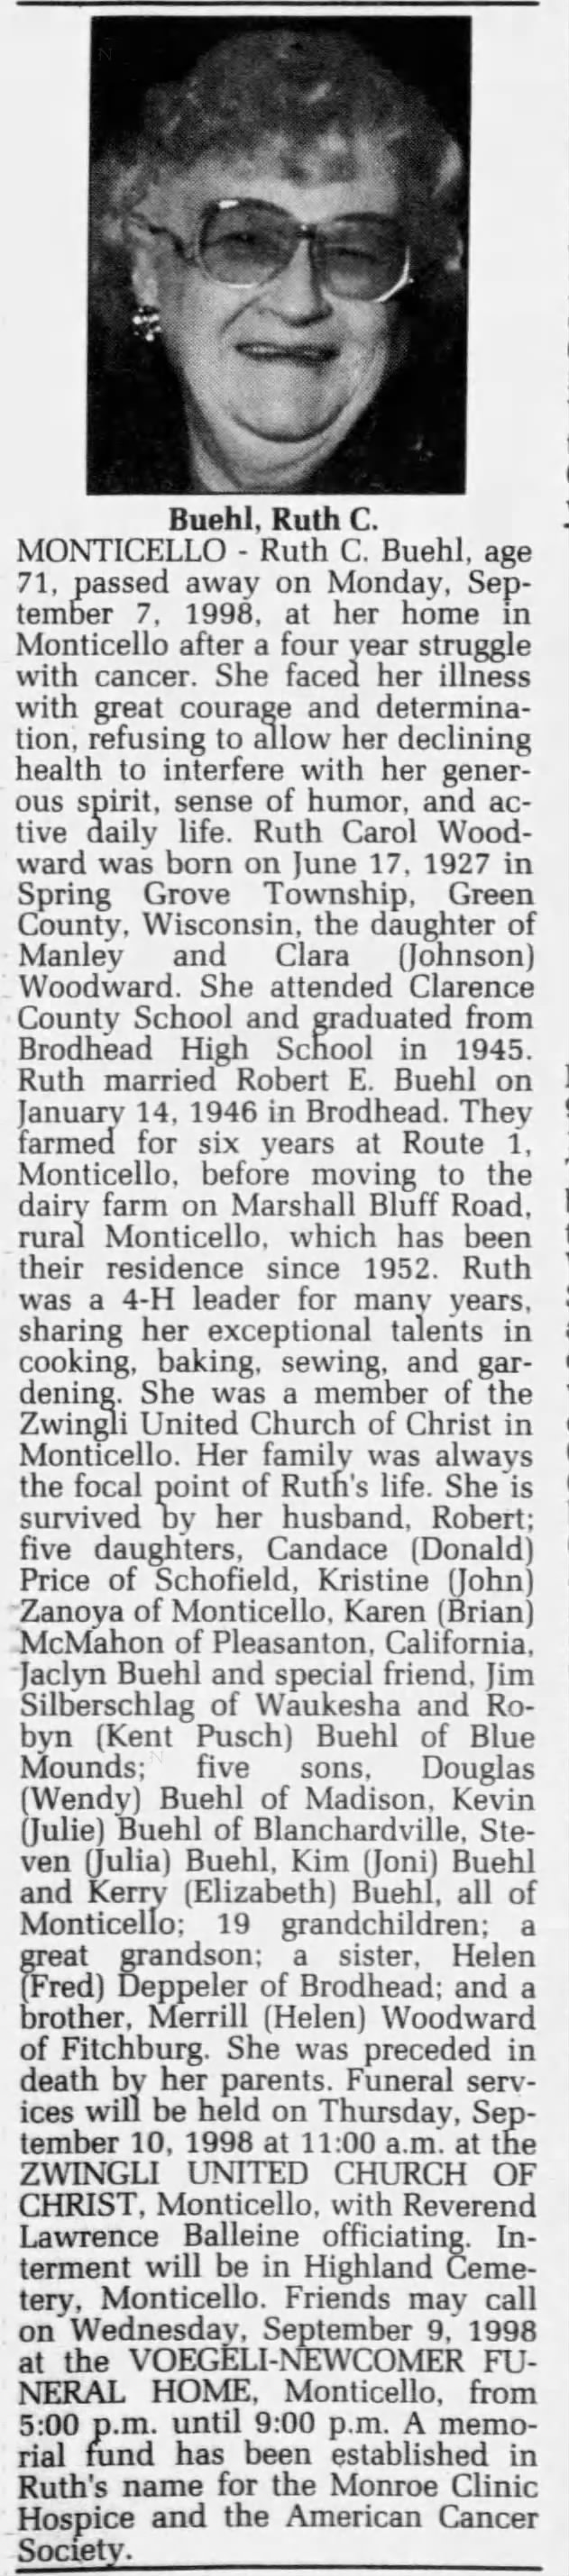 Ruth Buehl obituary